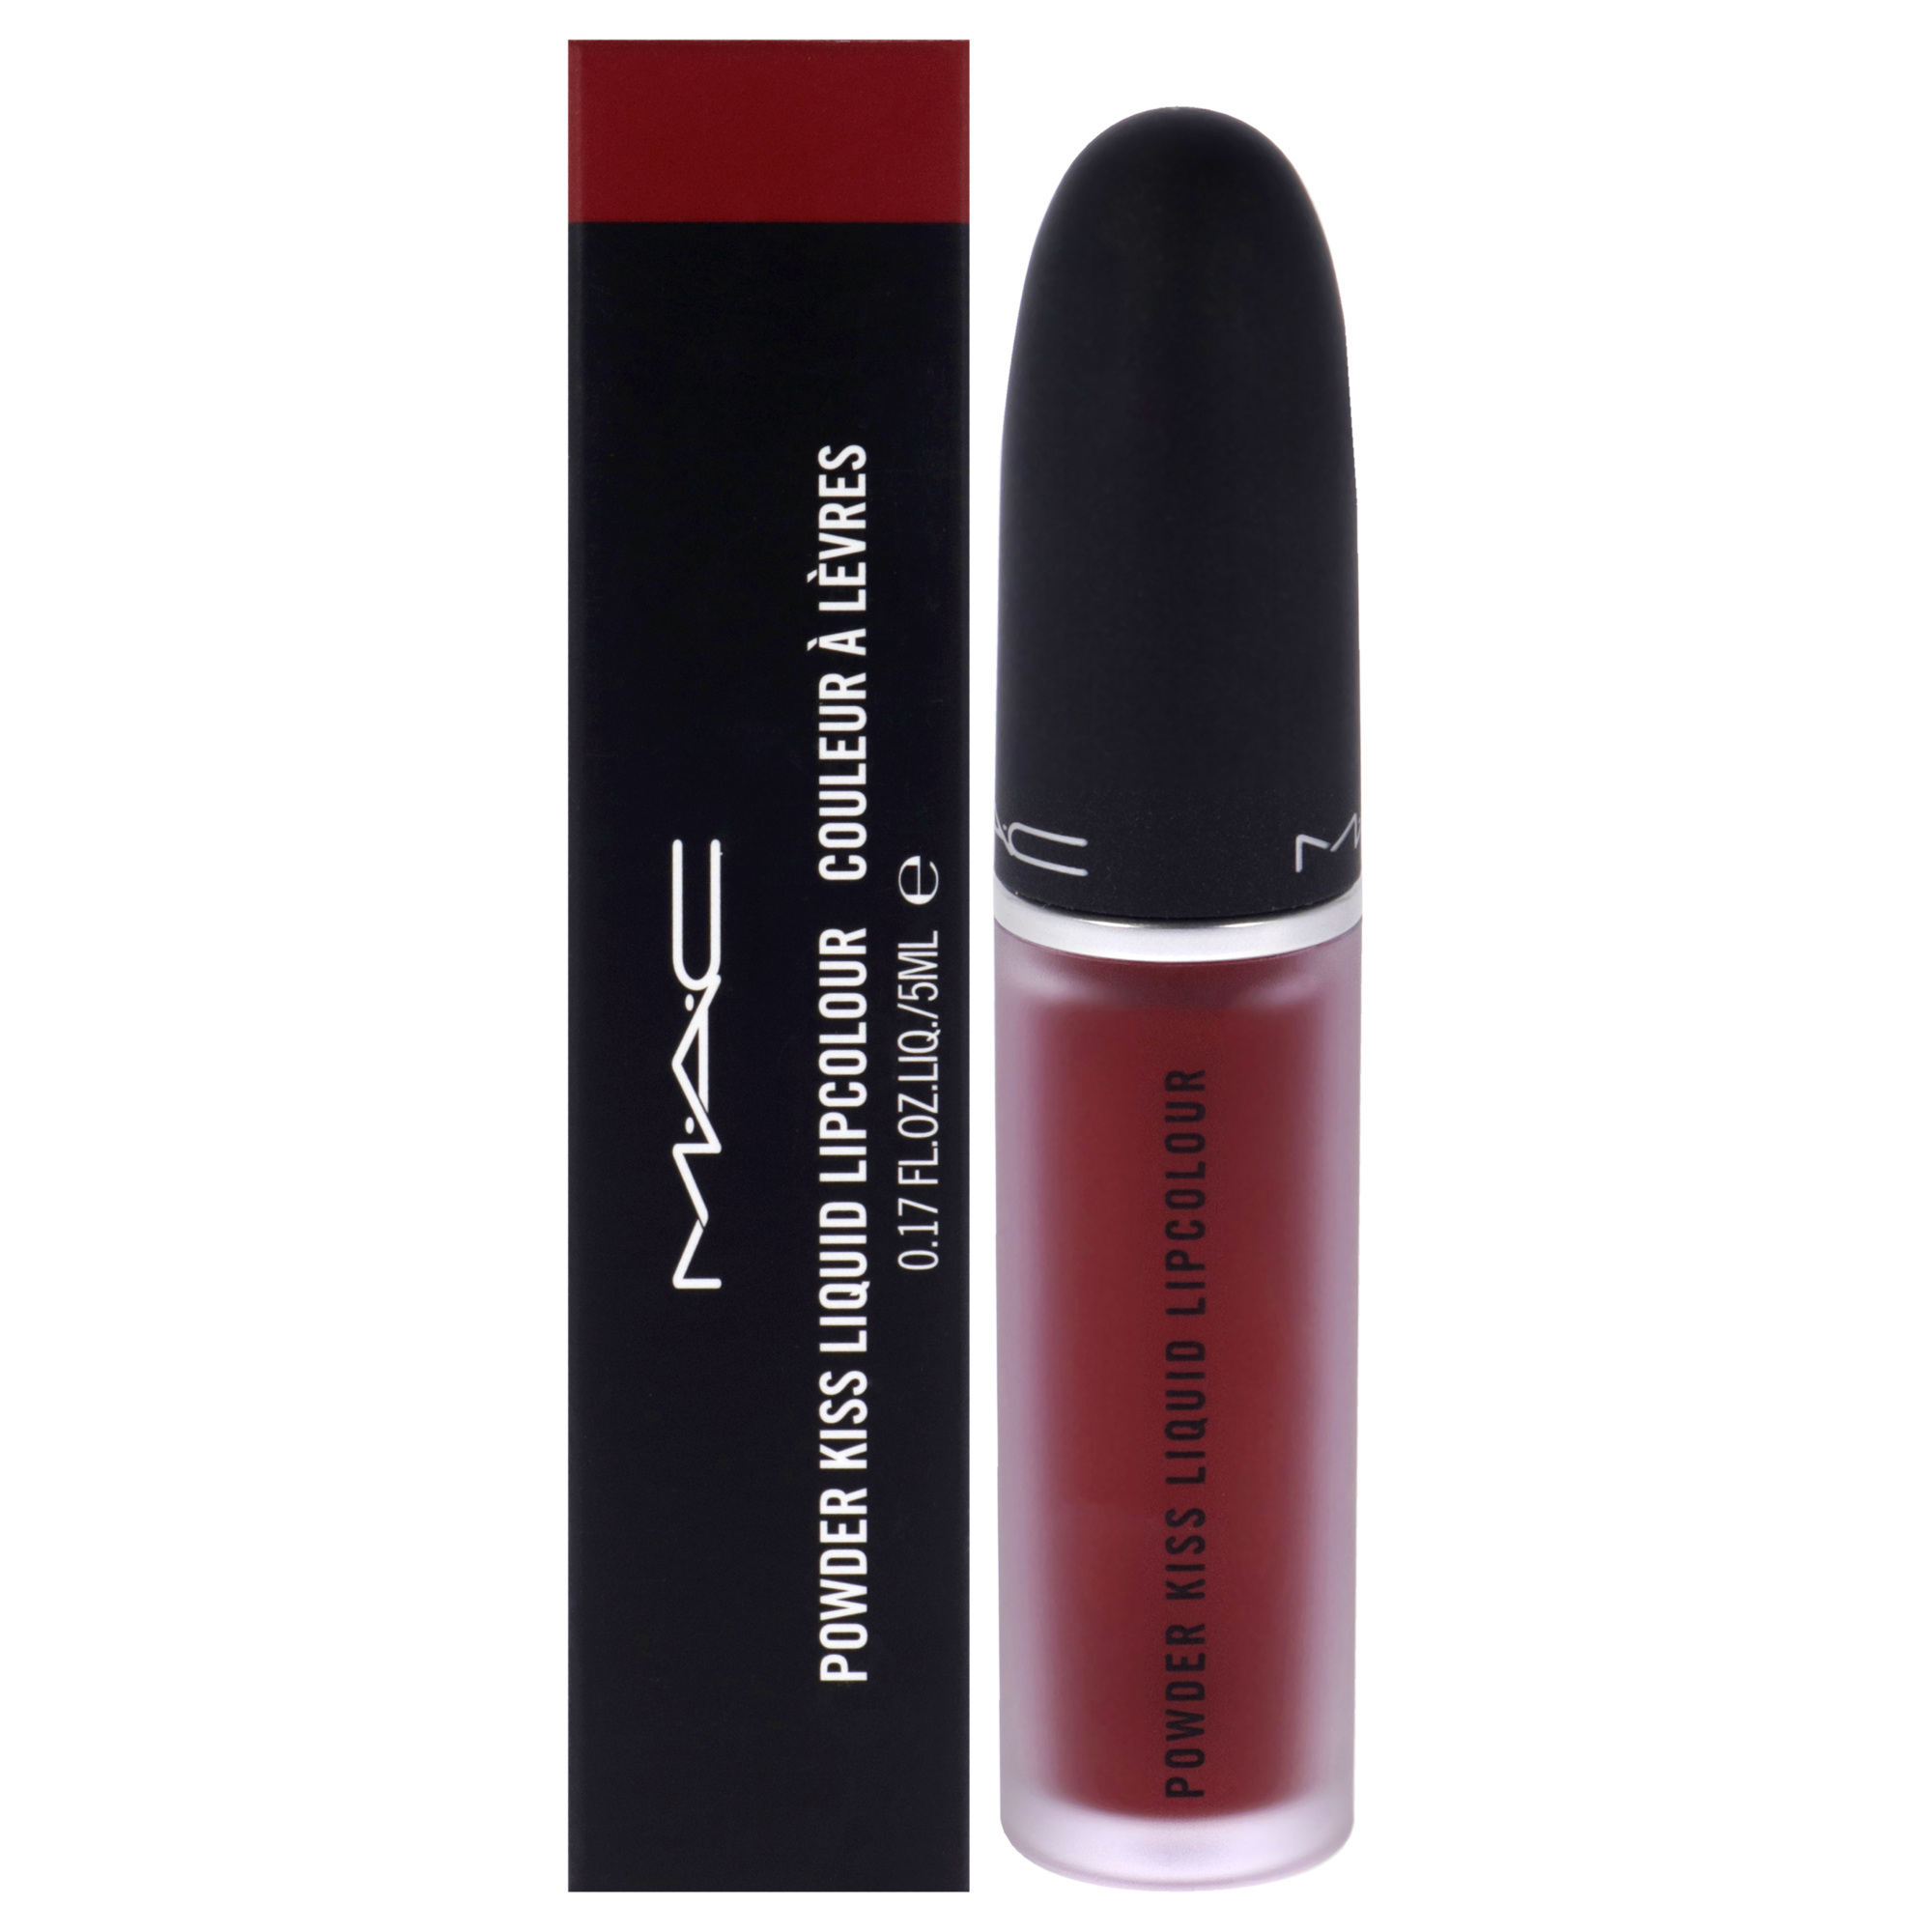 Powder Kiss Liquid Lipcolor - 975 Ruby Boo by MAC for Women - 0&period;17 oz Lipstick